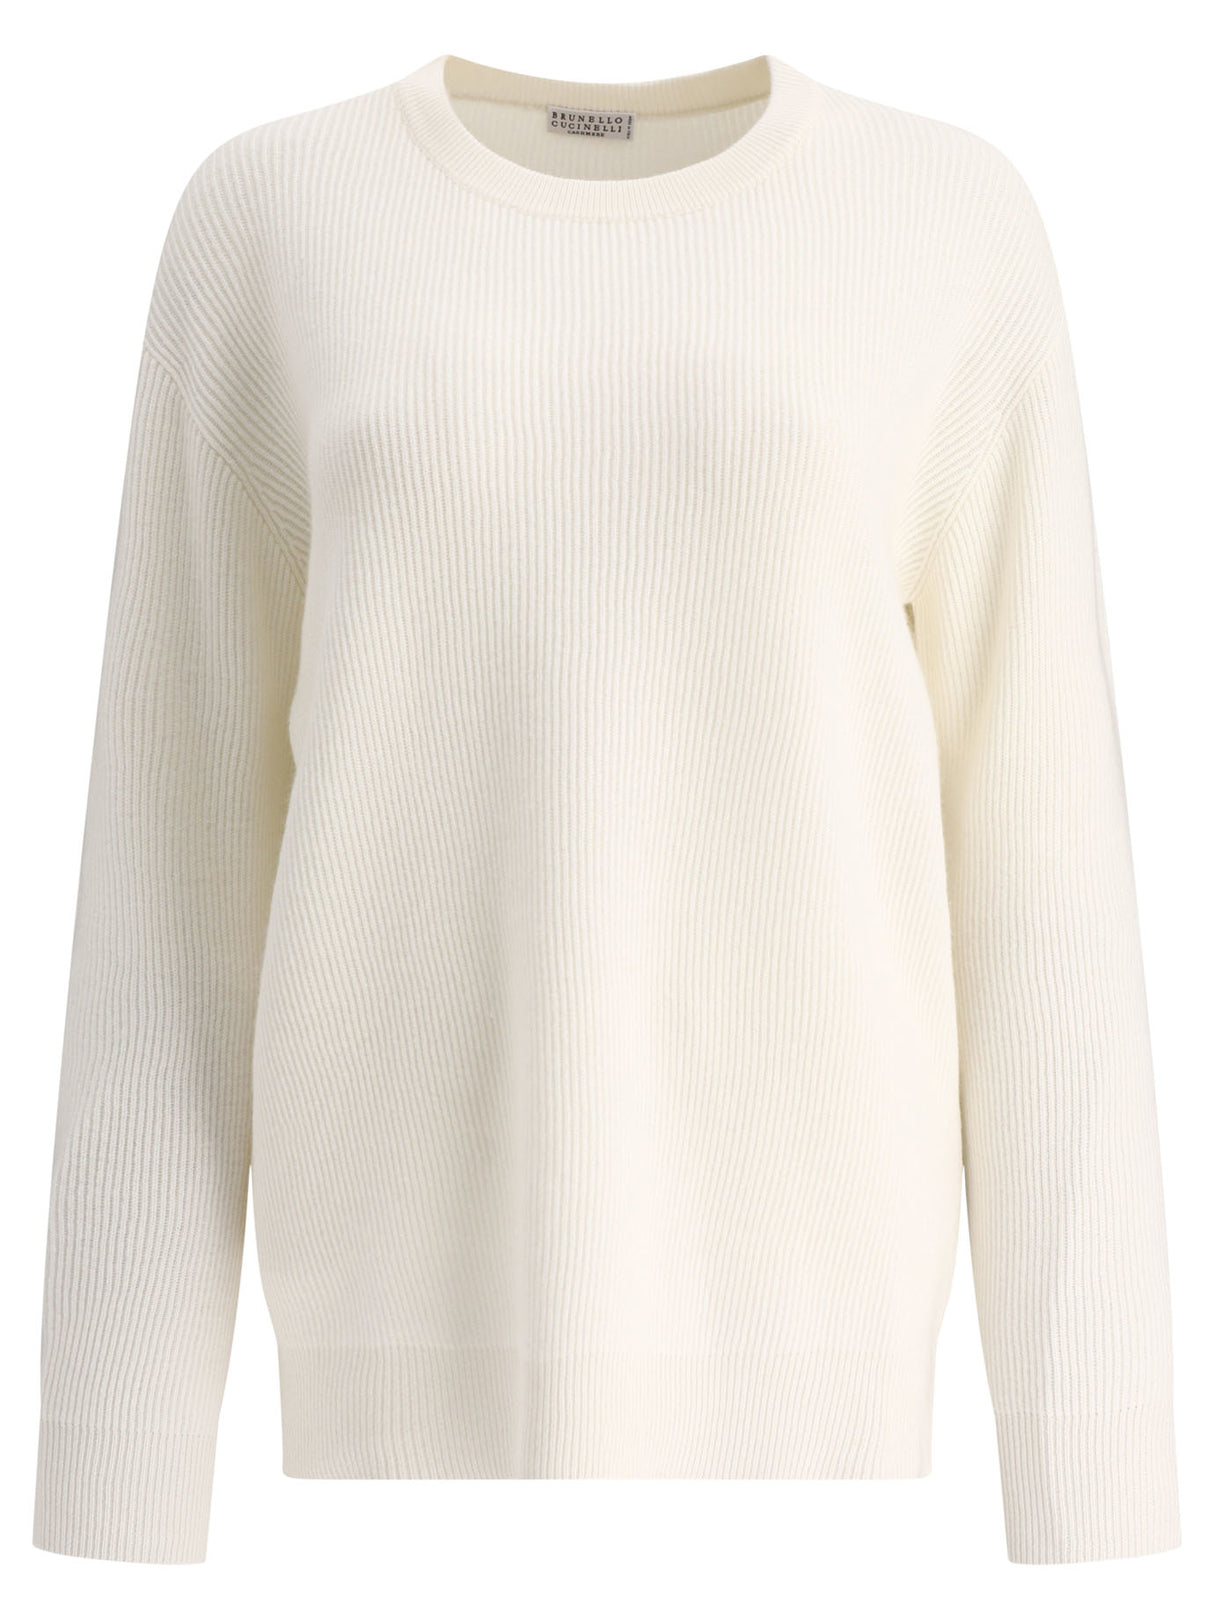 BRUNELLO CUCINELLI White Cashmere Ribbed Sweater with Monili Decoration for Women